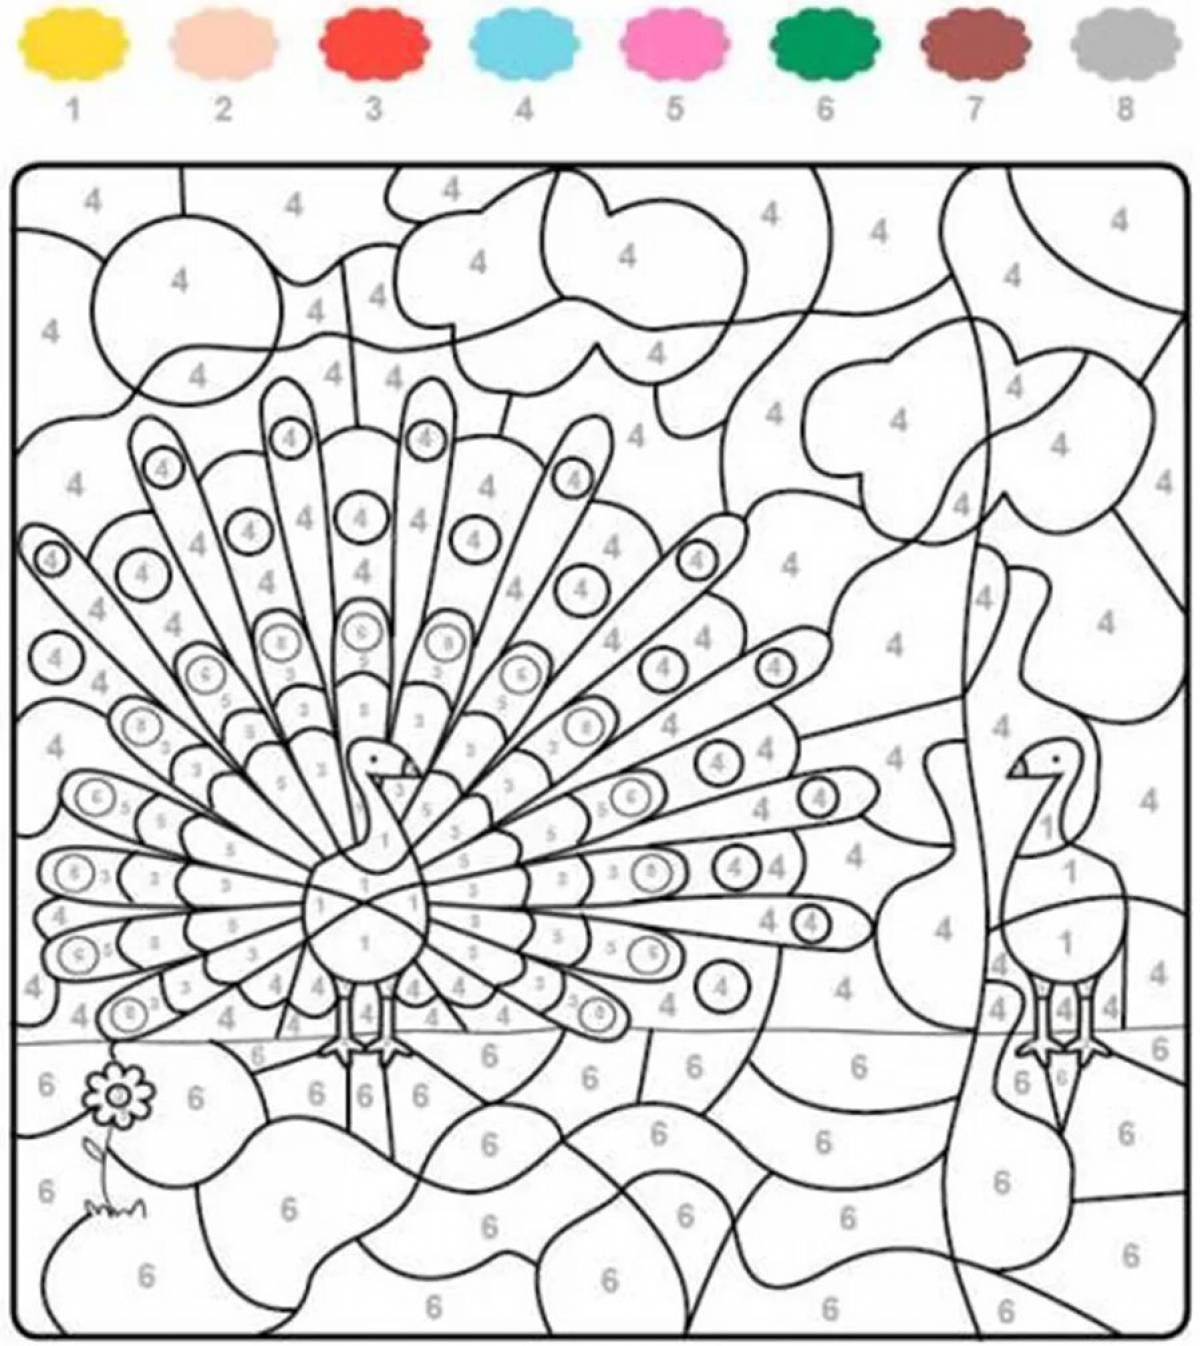 Generous peacock coloring by numbers